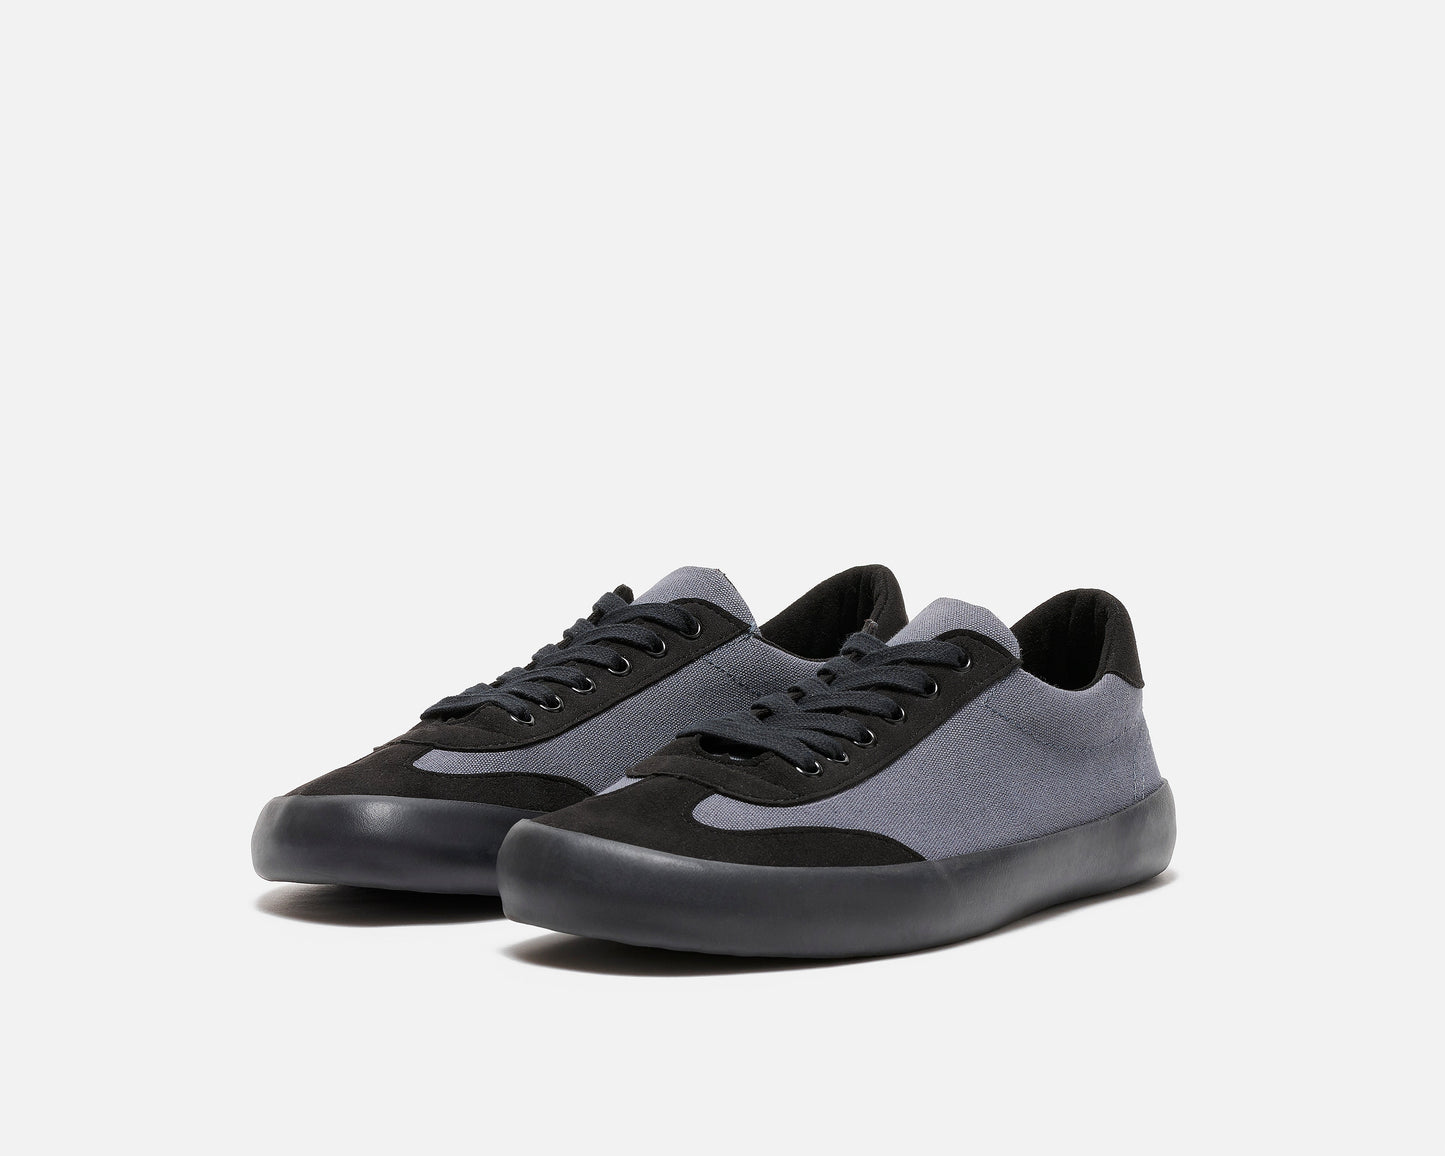 Bohempia Felix Dark Grey - Black - sneakers barefoot unisex